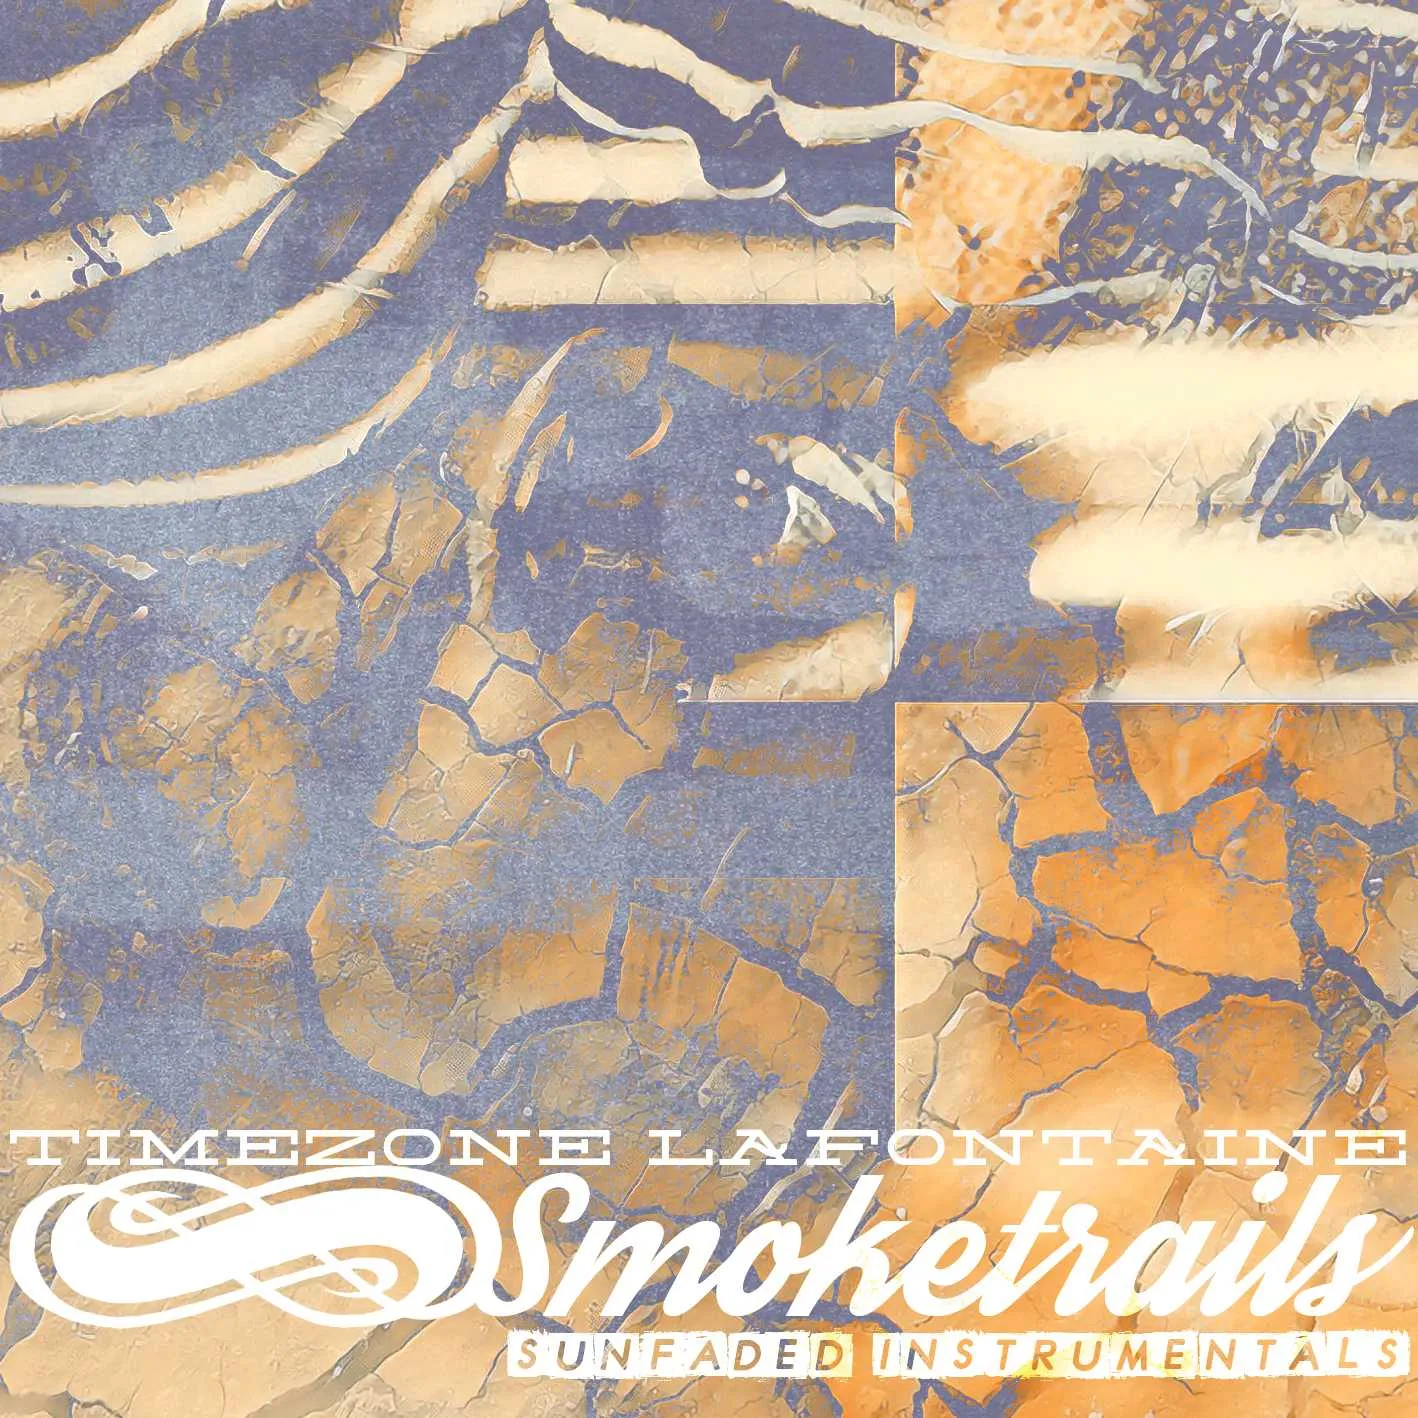 Album cover for “Smoketrails” by Timezone Lafontaine